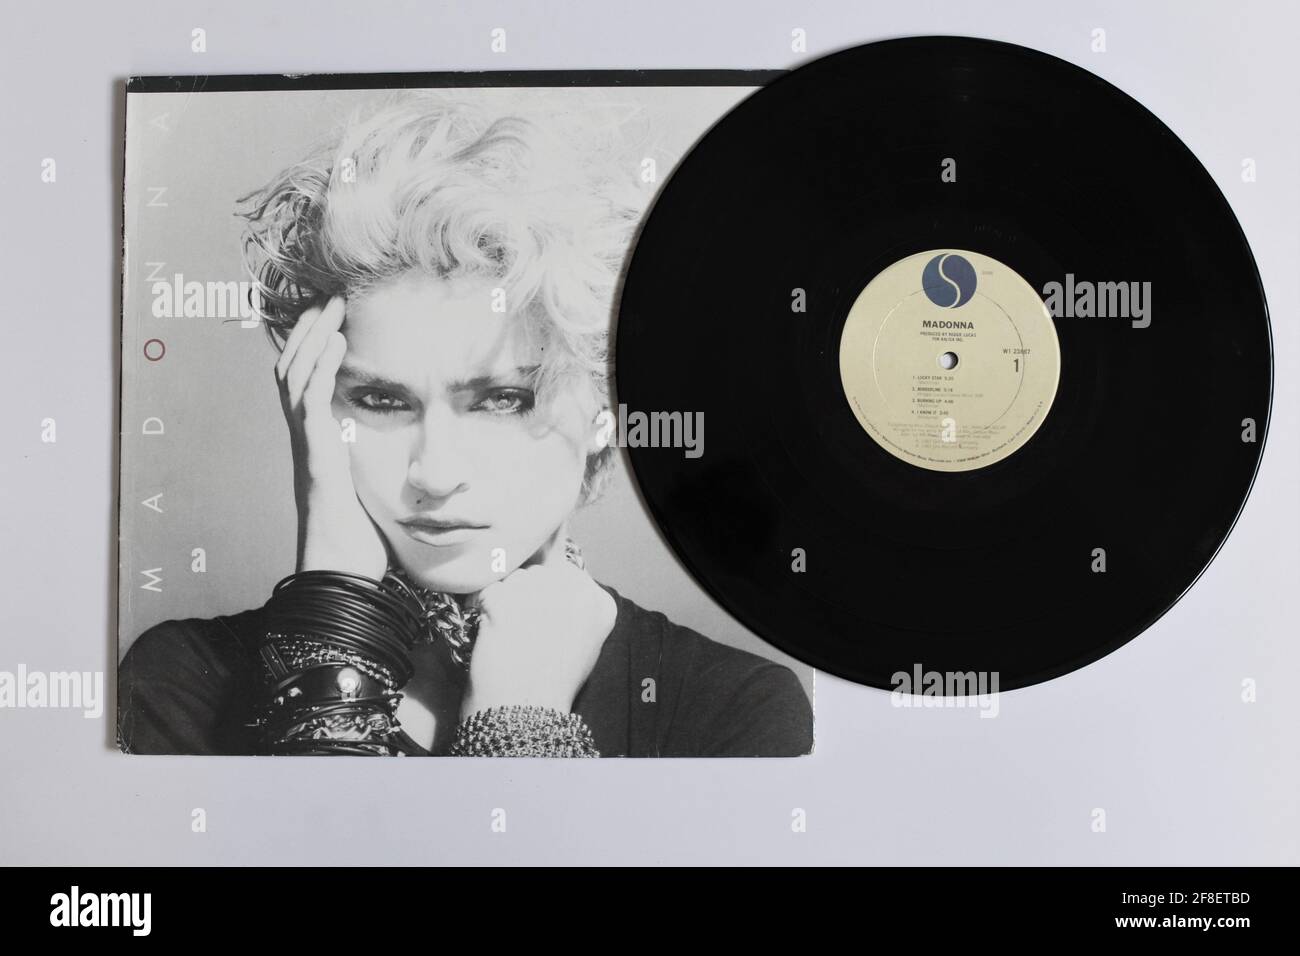 Dance, pop and disco artist, Madonna music album on vinyl record LP disc.  Titled: Madonna The First Album, album cover Stock Photo - Alamy